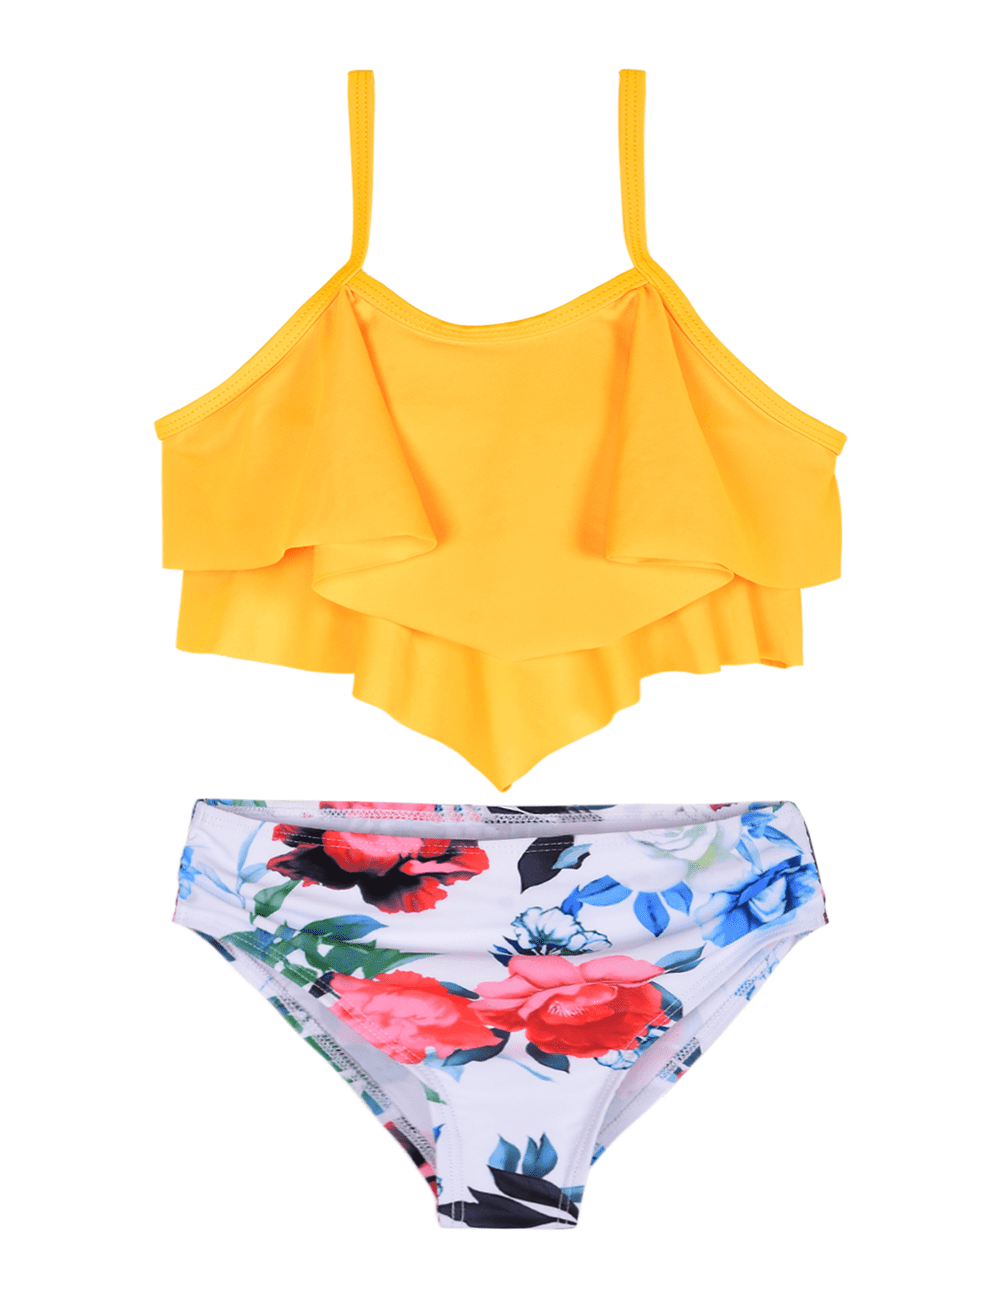 Hilor Girl's Bikini Set Flounce Two Piece Swimsuits Kids Ruffled Monokini Bathing Suits 